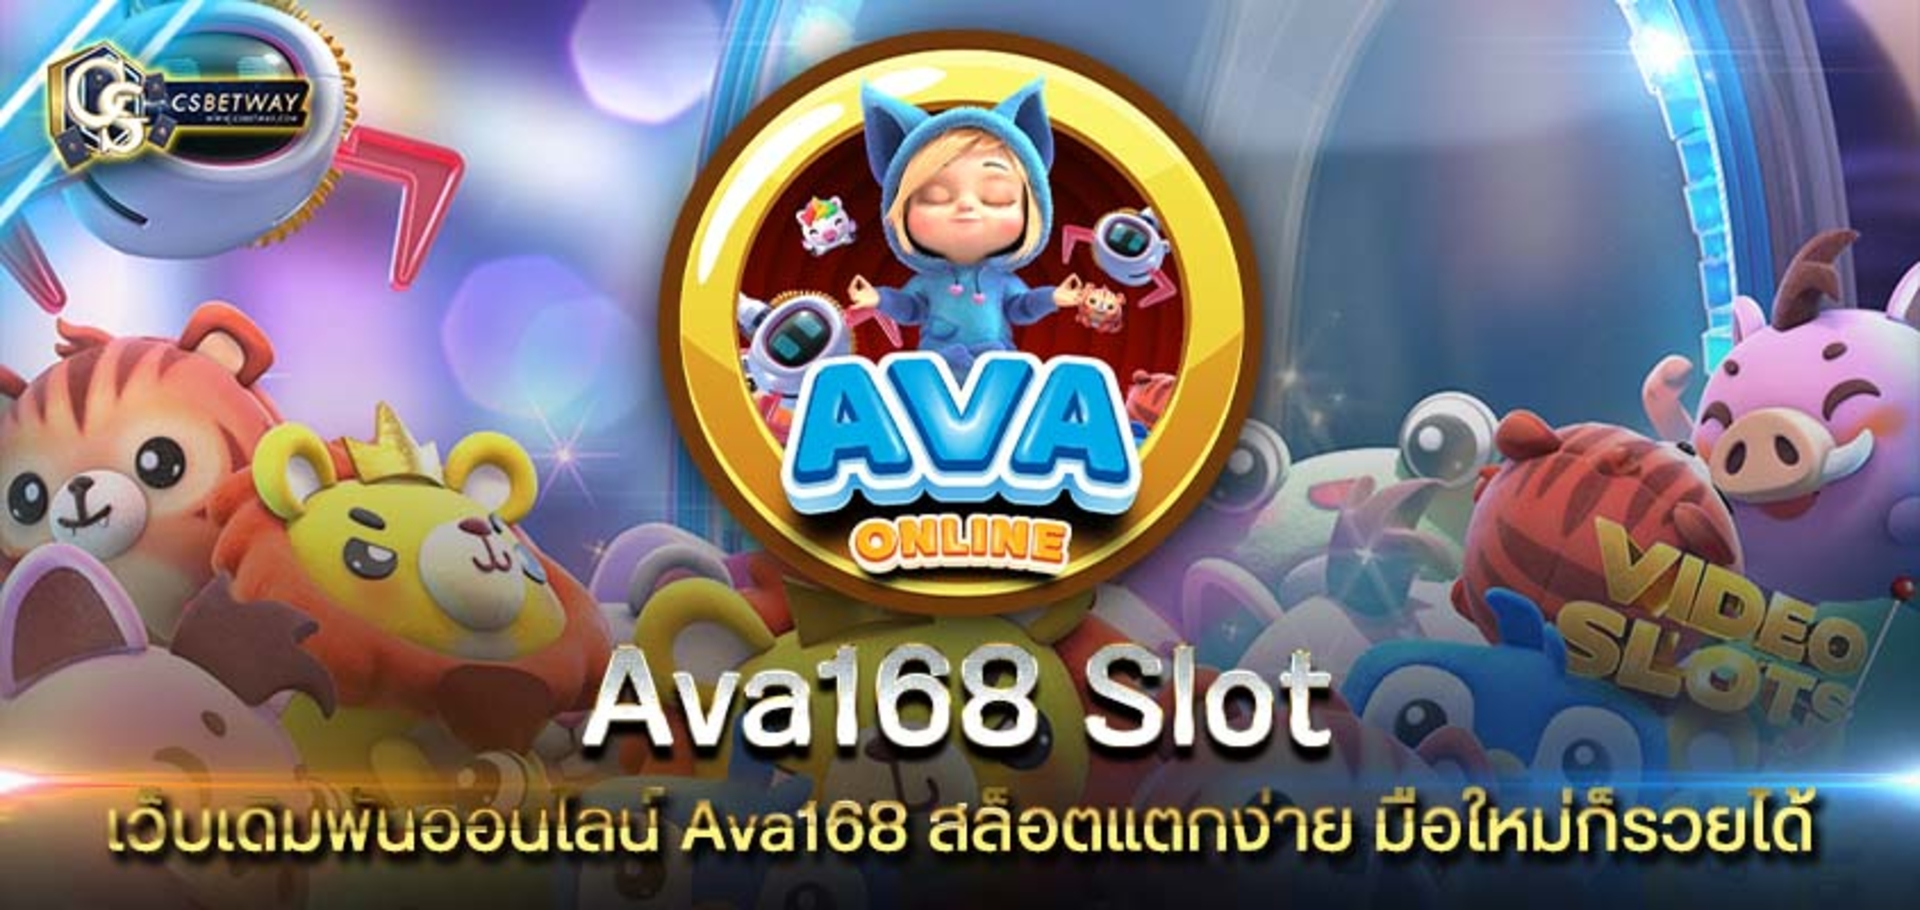 Ava168 Slot เว็บเดิมพันออนไลน์ Ava168 สล็อตแตกง่าย มือใหม่ก็รวยได้